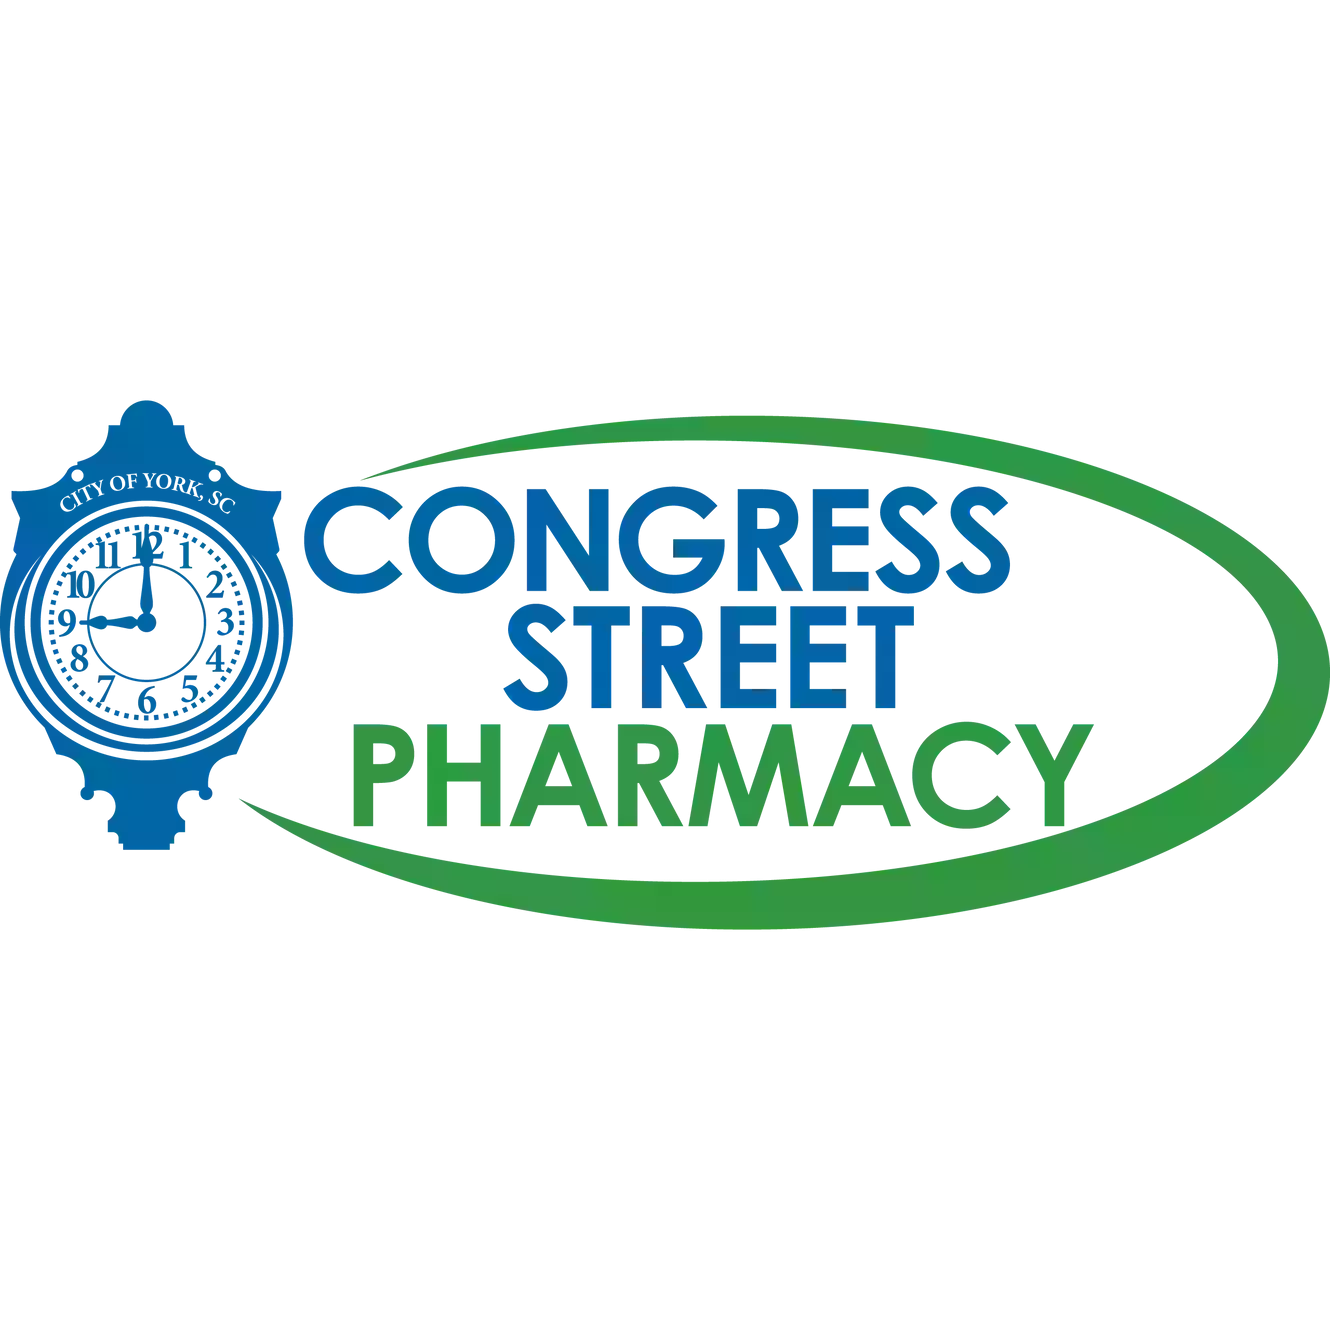 Congress Street Pharmacy